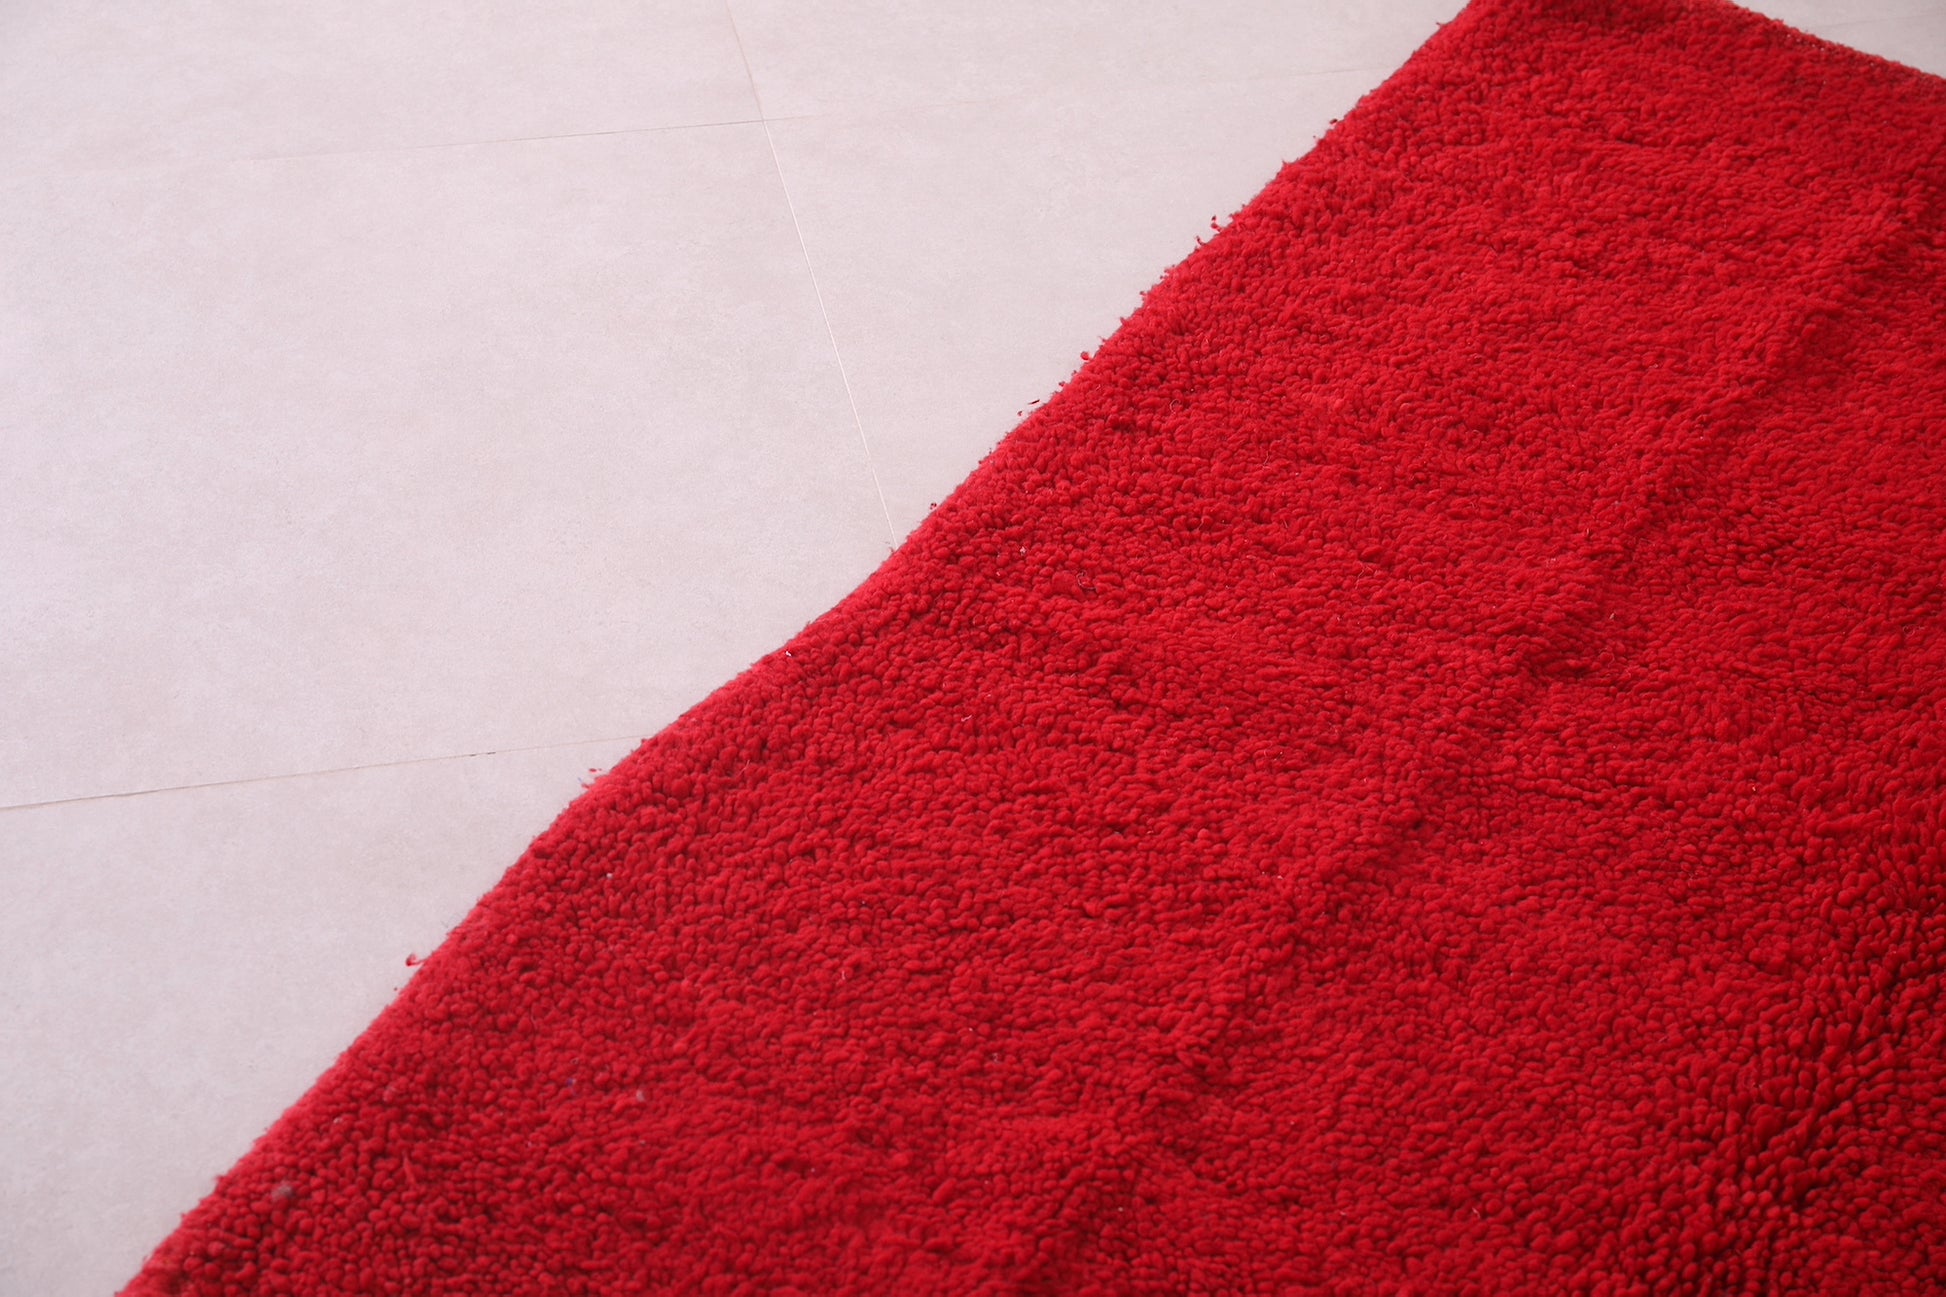 Red Beni Ourain carpet 3.8 X 4.8 Feet